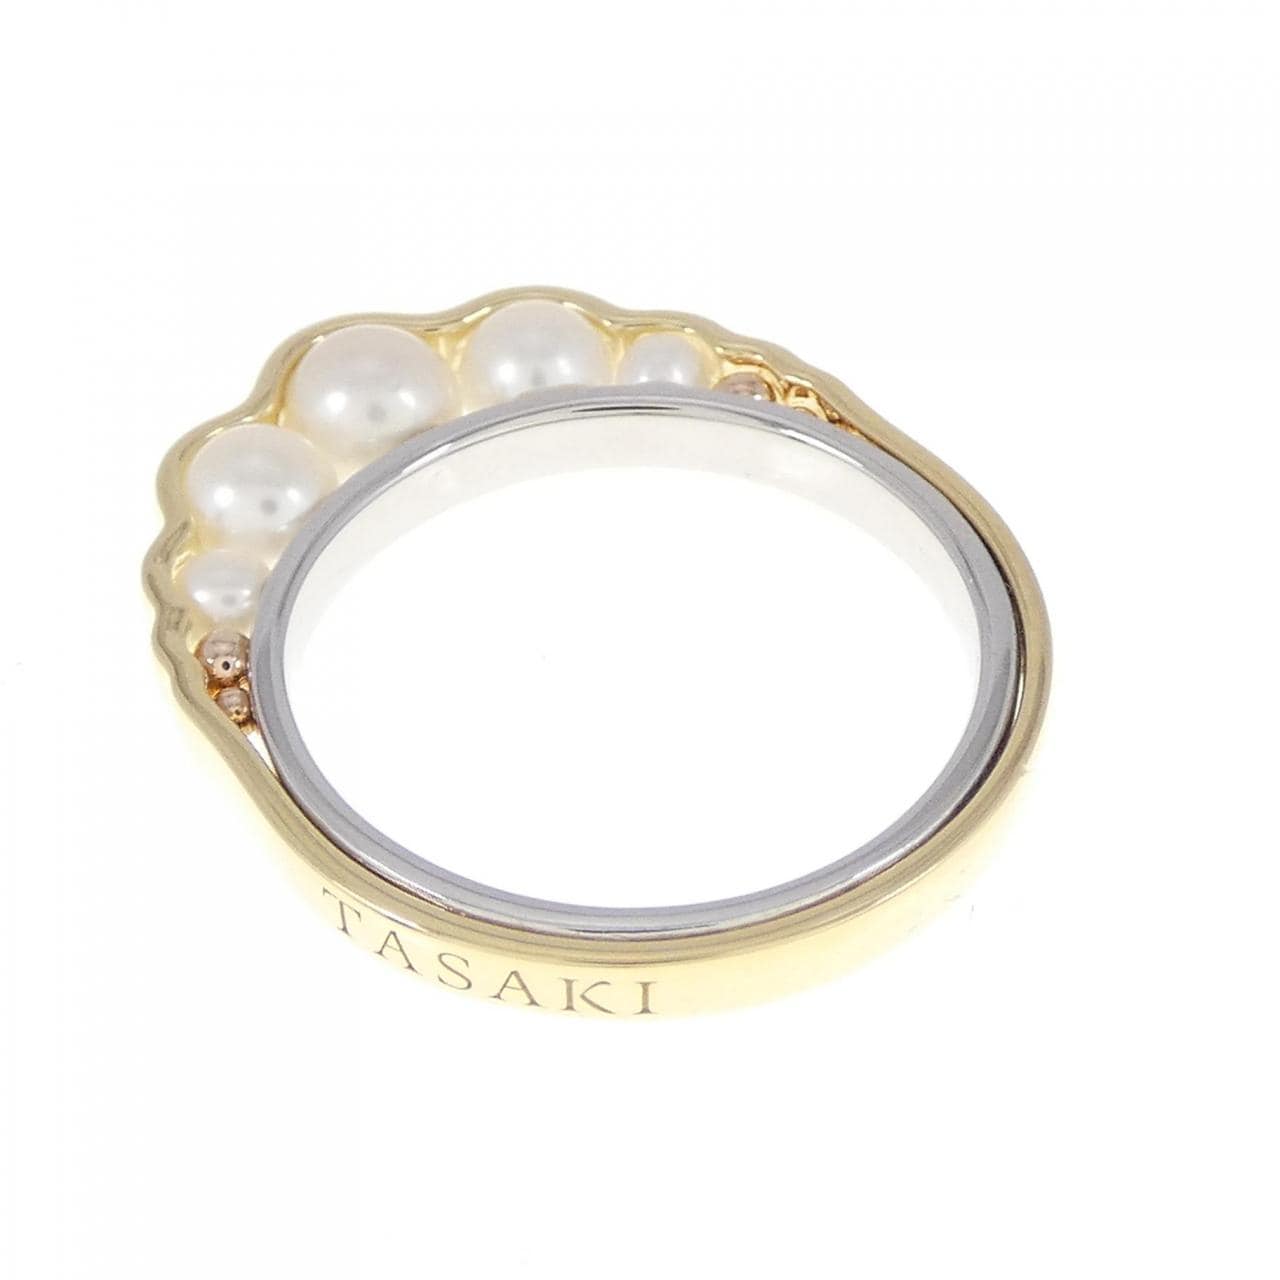 Tasaki Akoya pearl ring